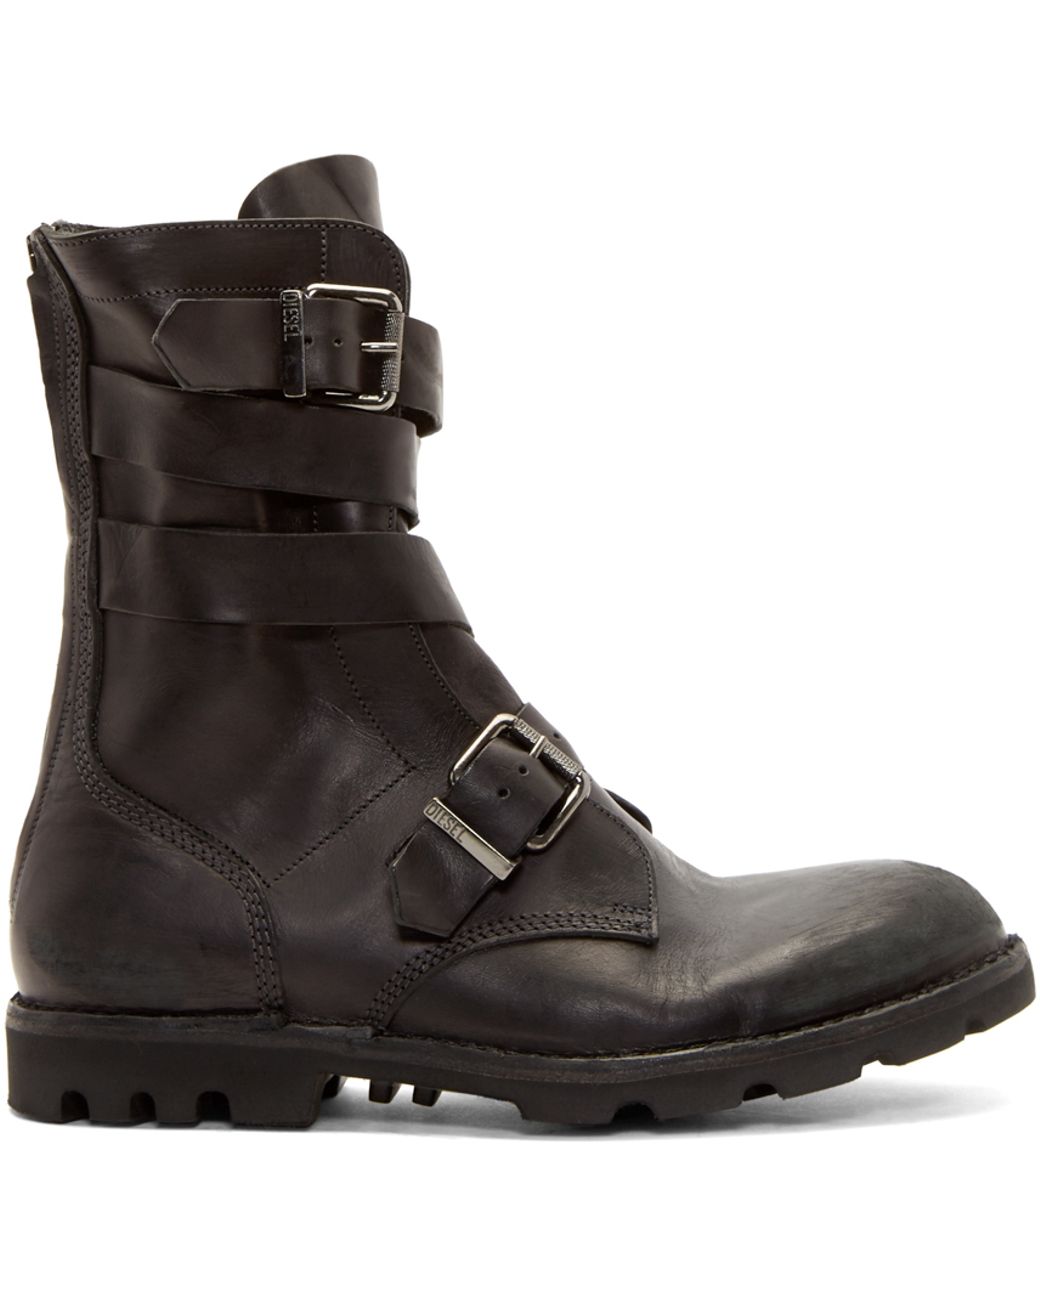 DIESEL Black Leather D-tankker Boots for Men | Lyst